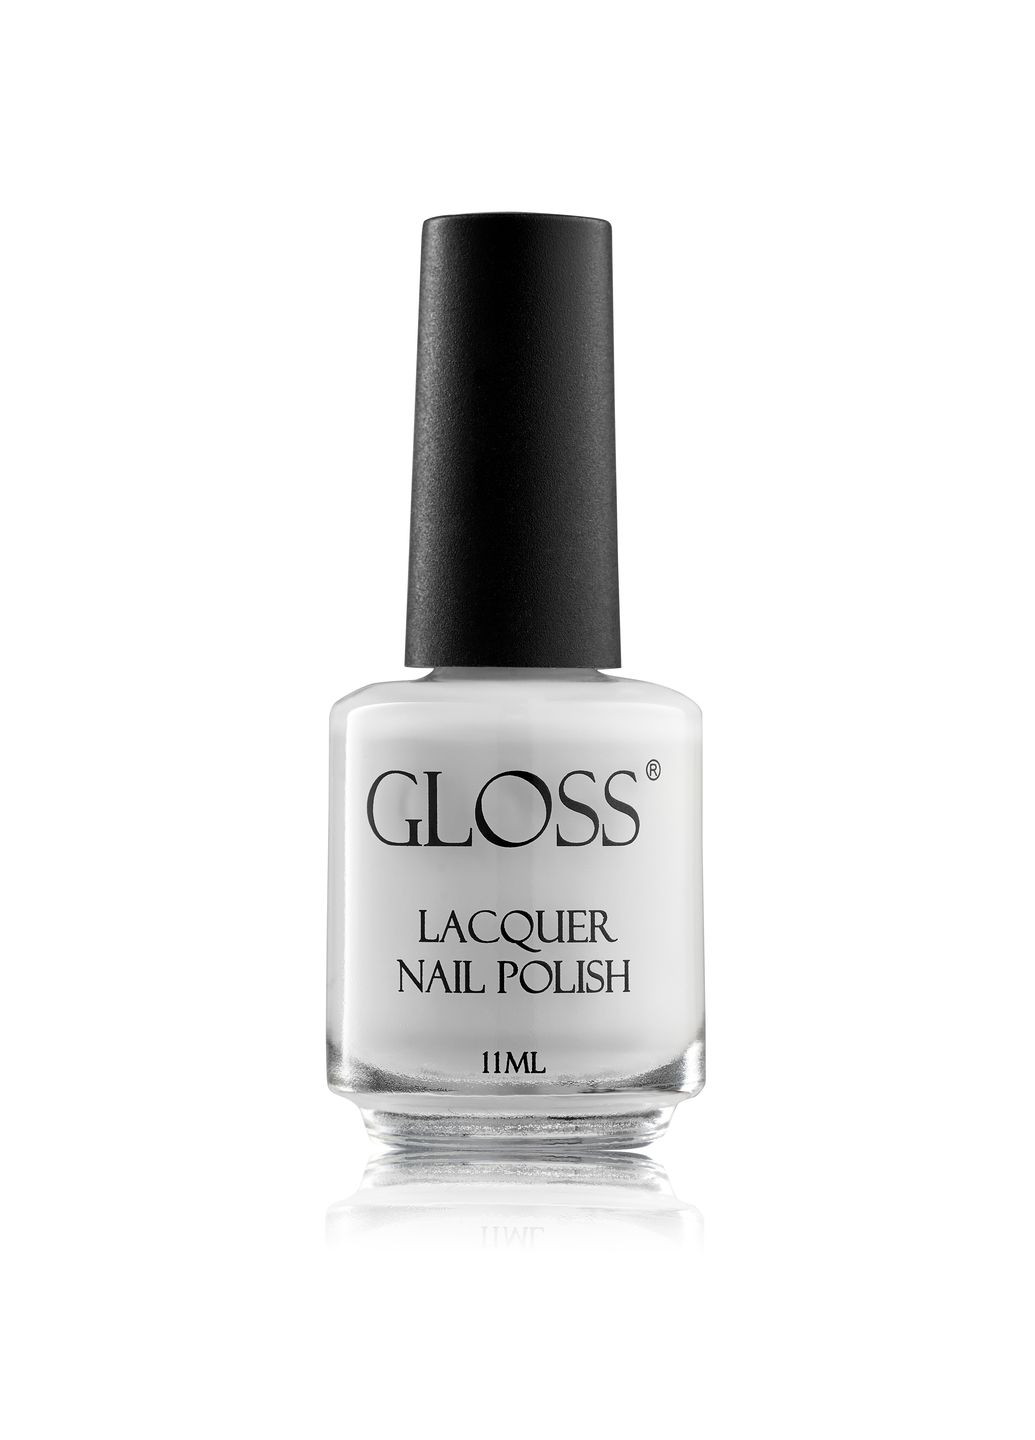 Лак для ногтей GLOSS 001, 11 мл Gloss Company lacquer nail polish (276255631)